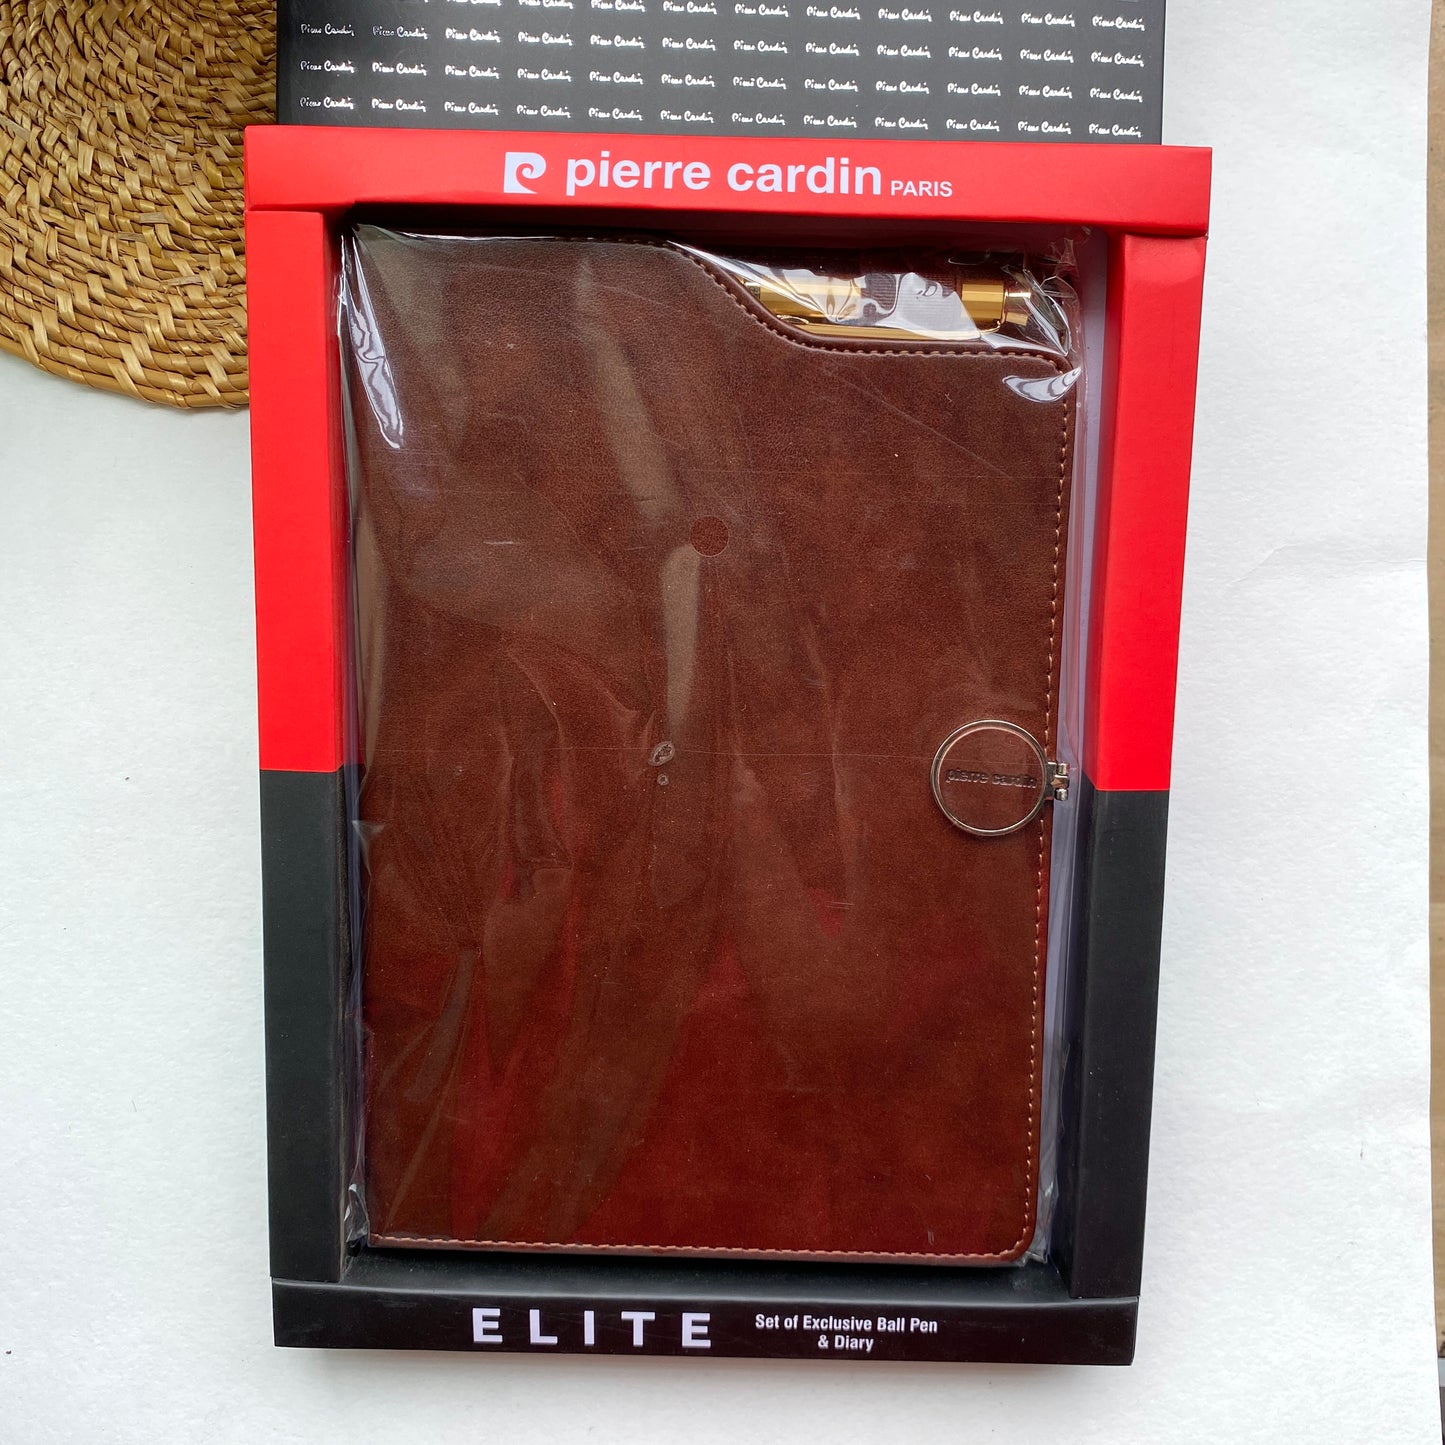 Pierre Cardin elite | set of exclusive ball pen & diary